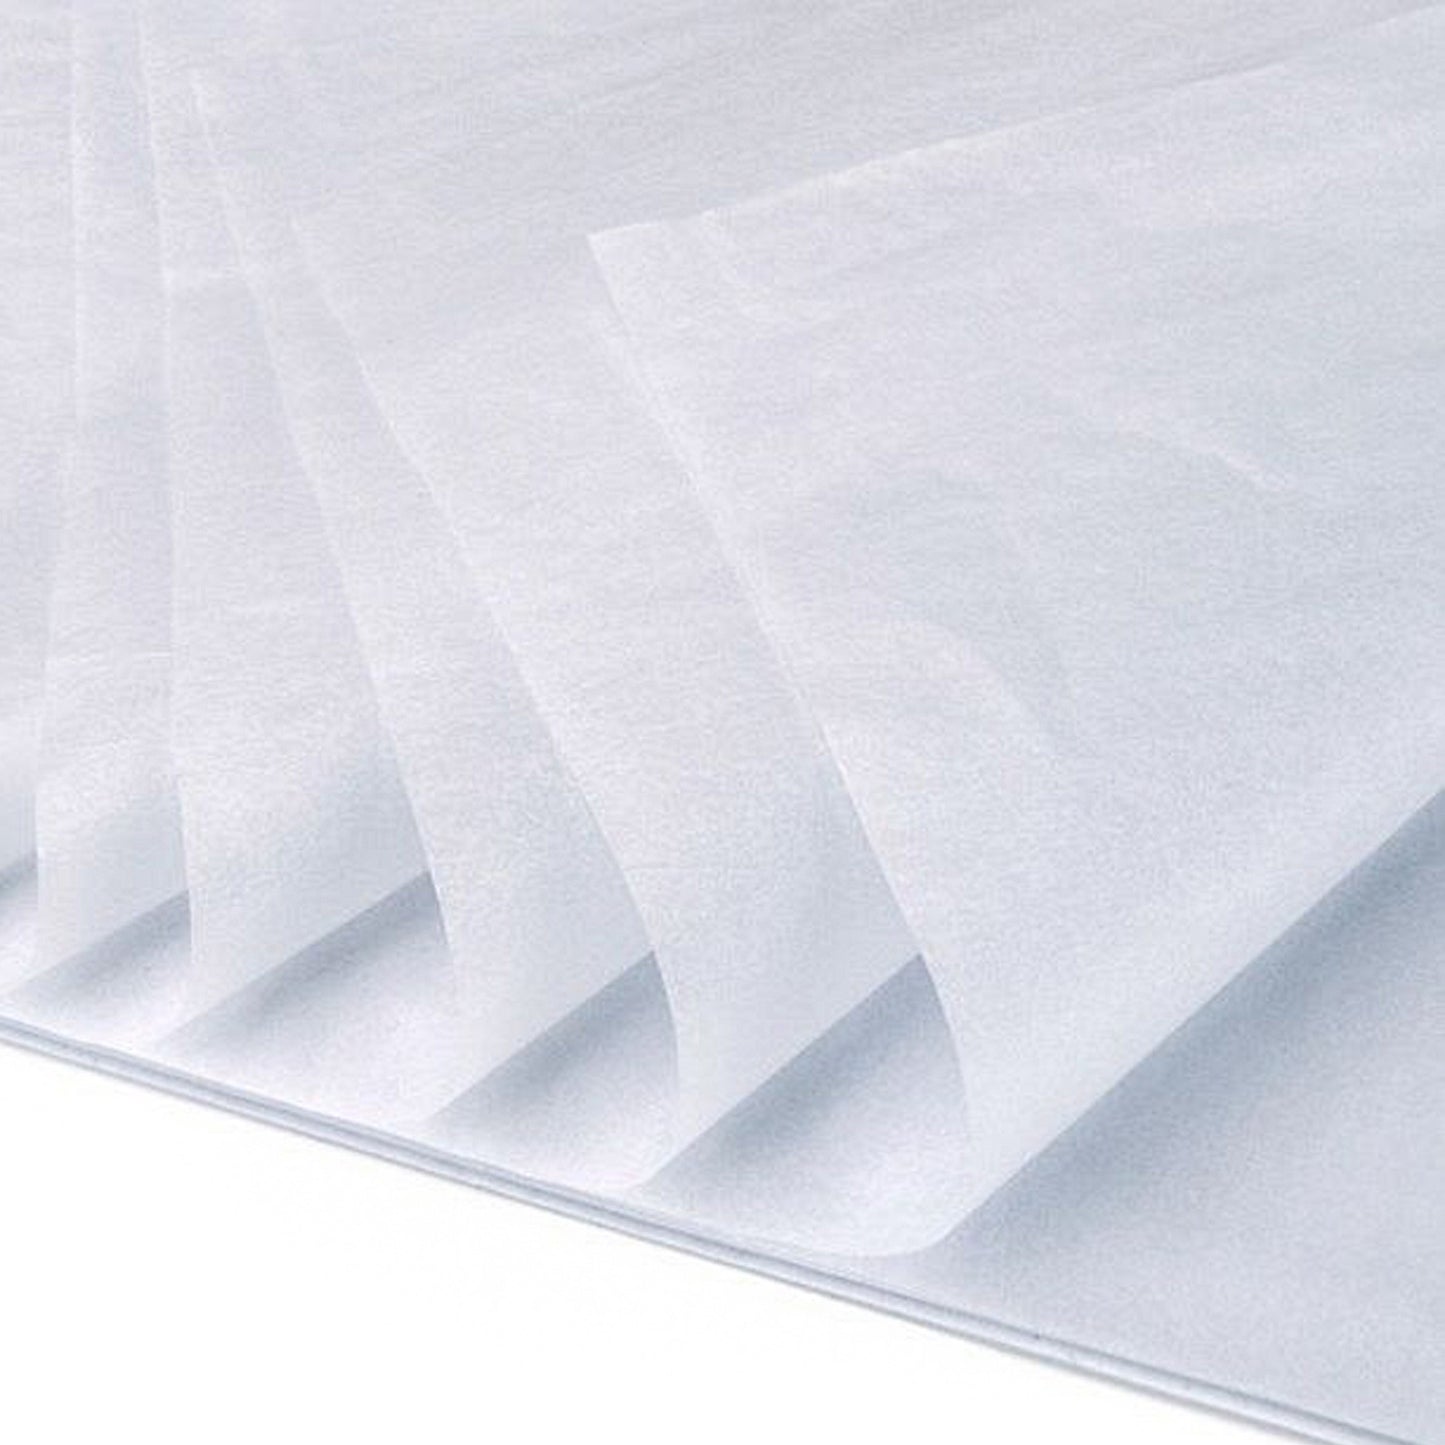 White Acid Free 18 x 28" Arts & Kraft Wrapping Packing Tissue Paper